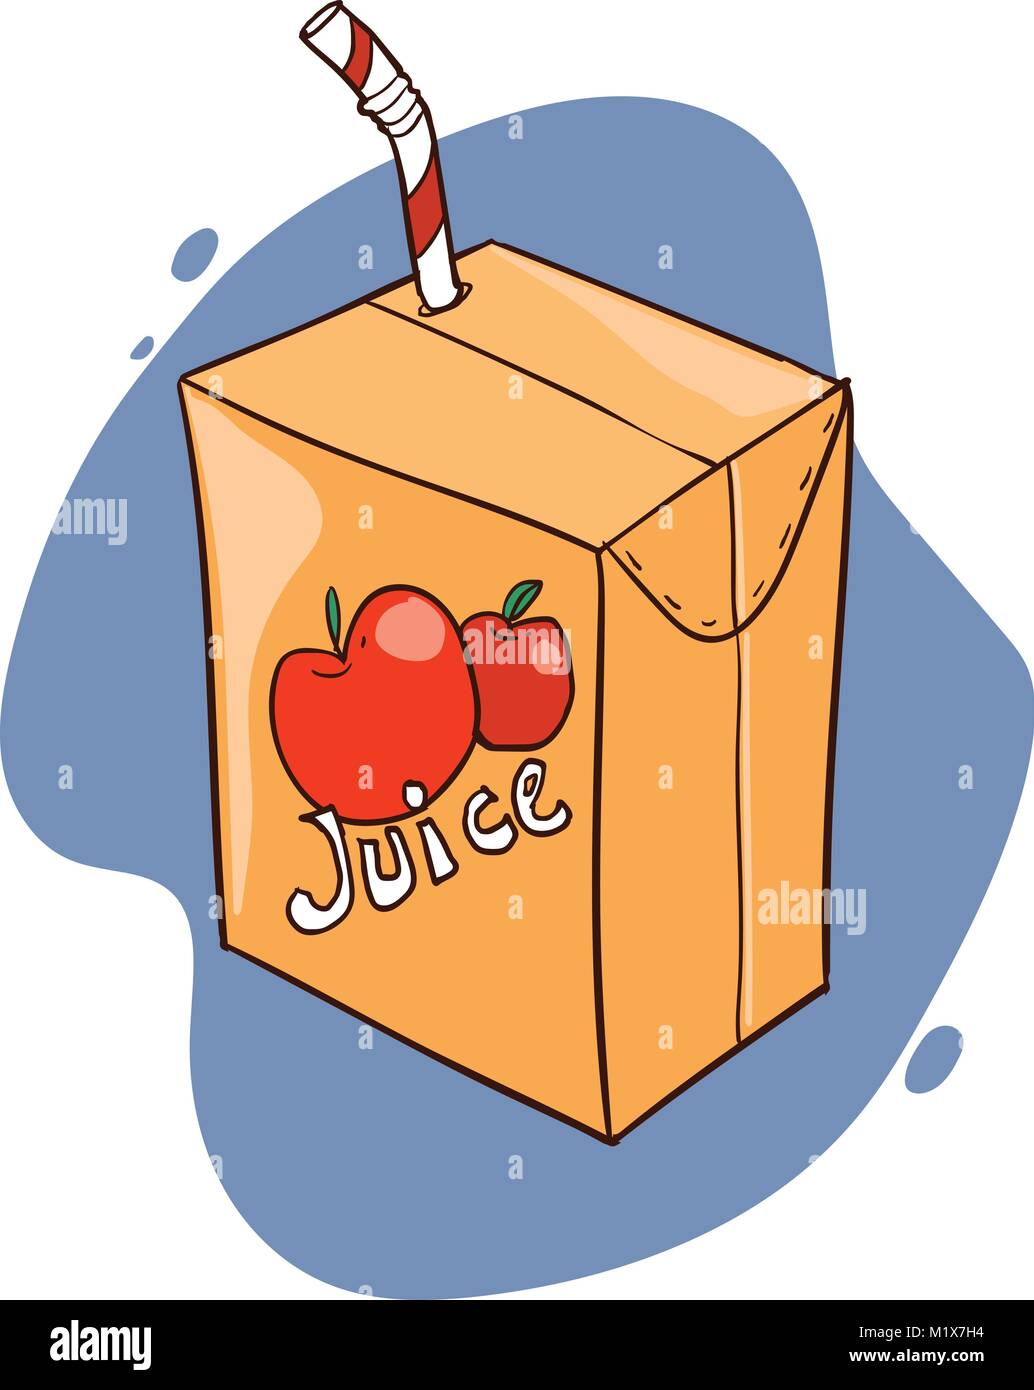 Juice box cartoon hi-res stock photography and images - Alamy